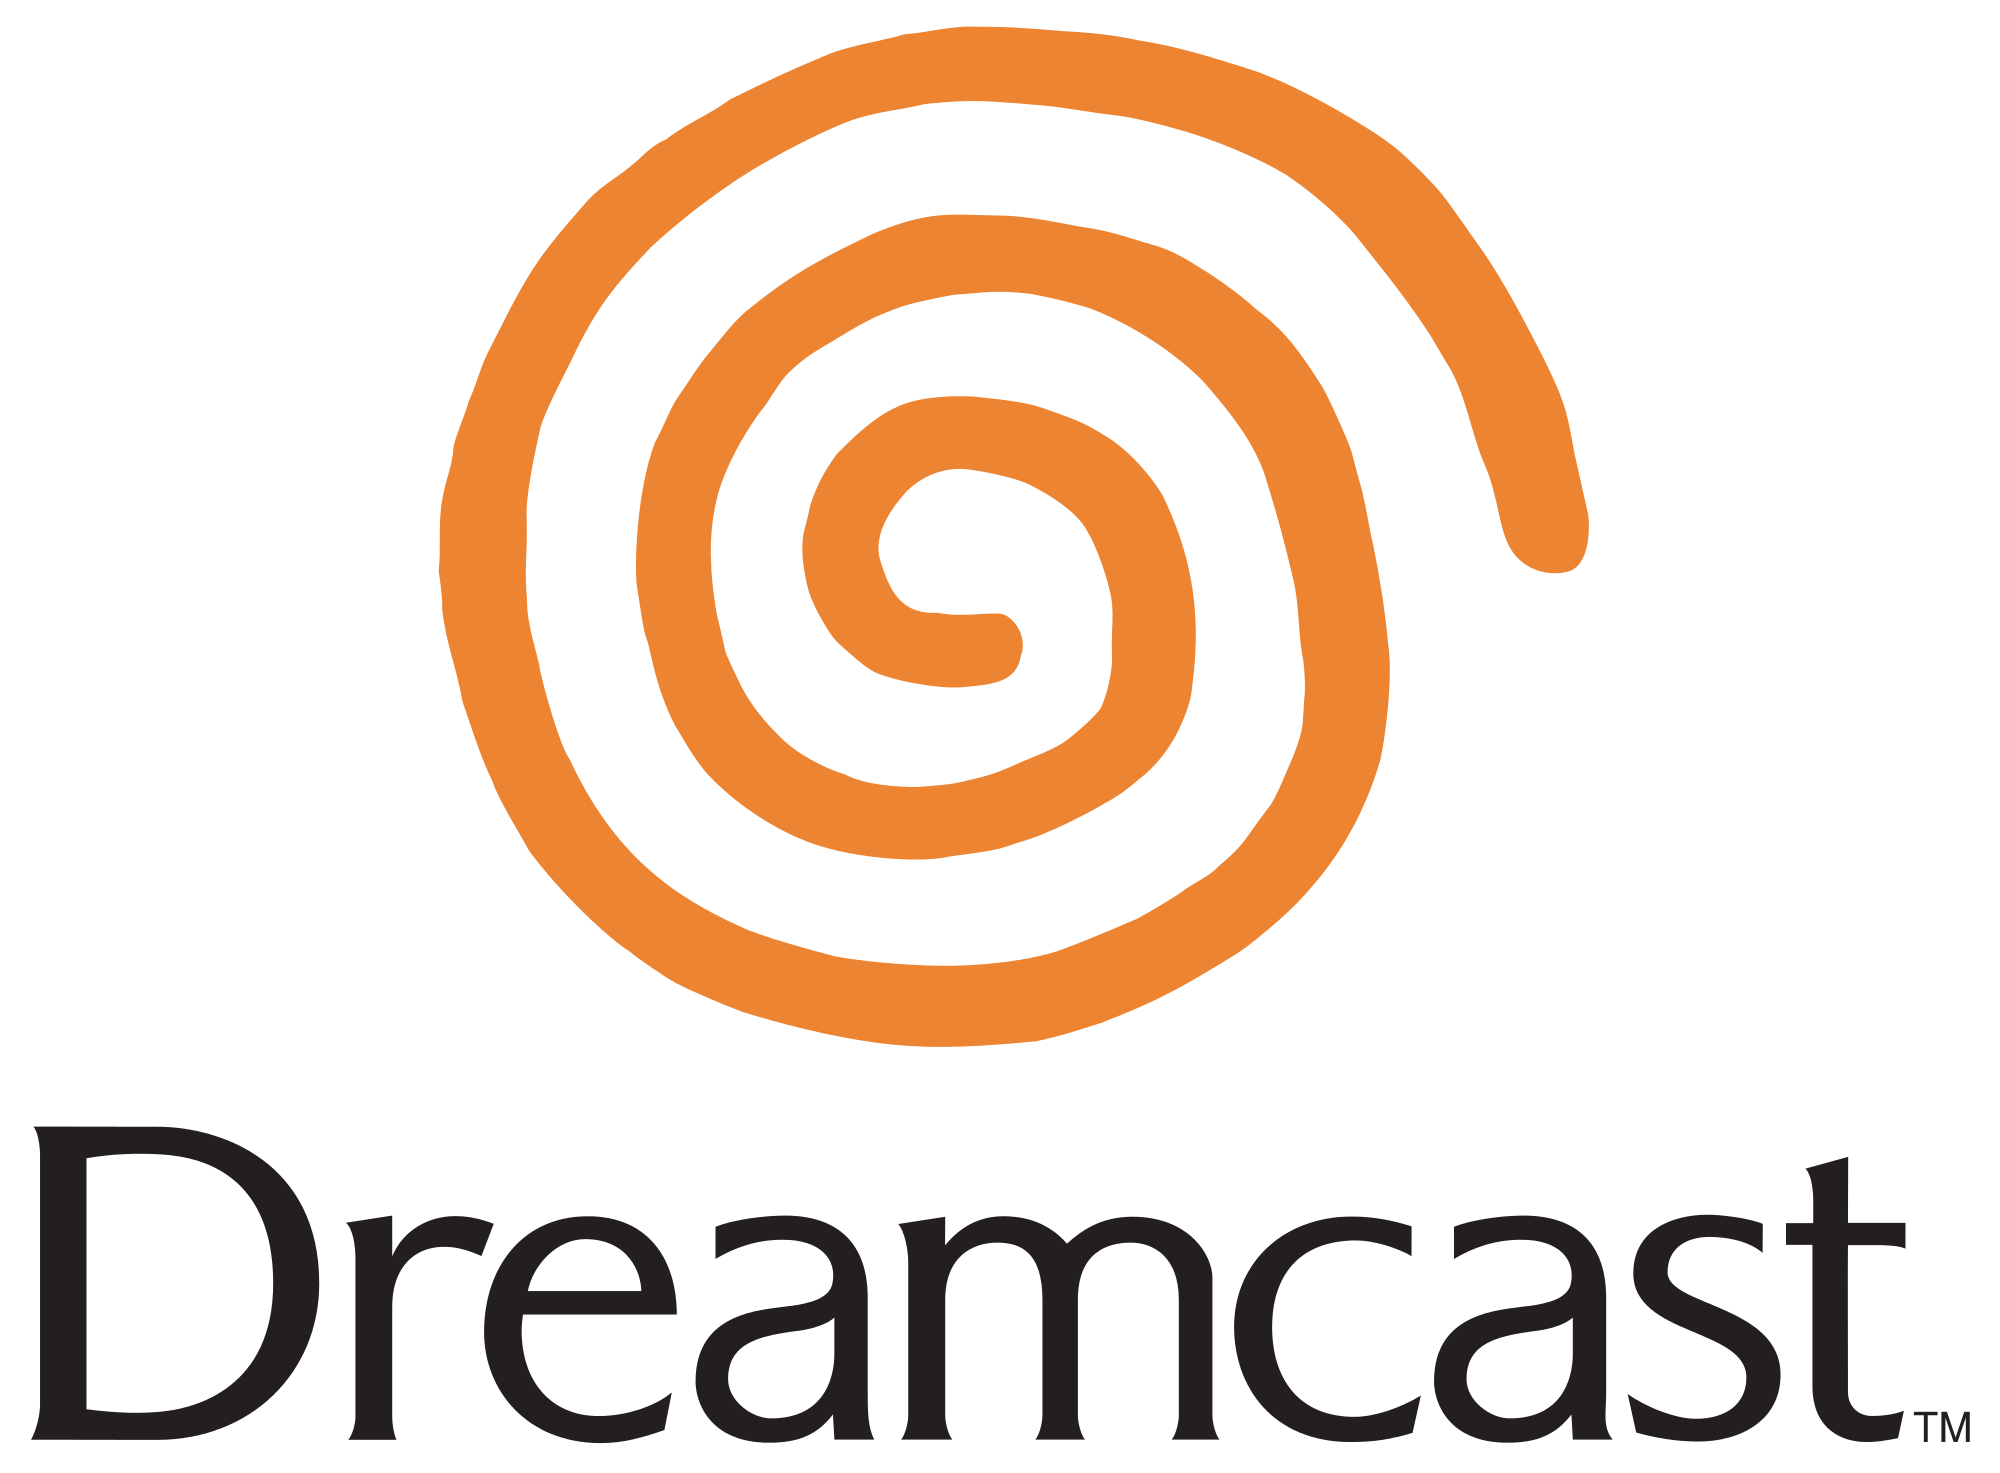 Orange Spiral Logo - File:Dreamcast logo (orange).svg - Wikimedia Commons